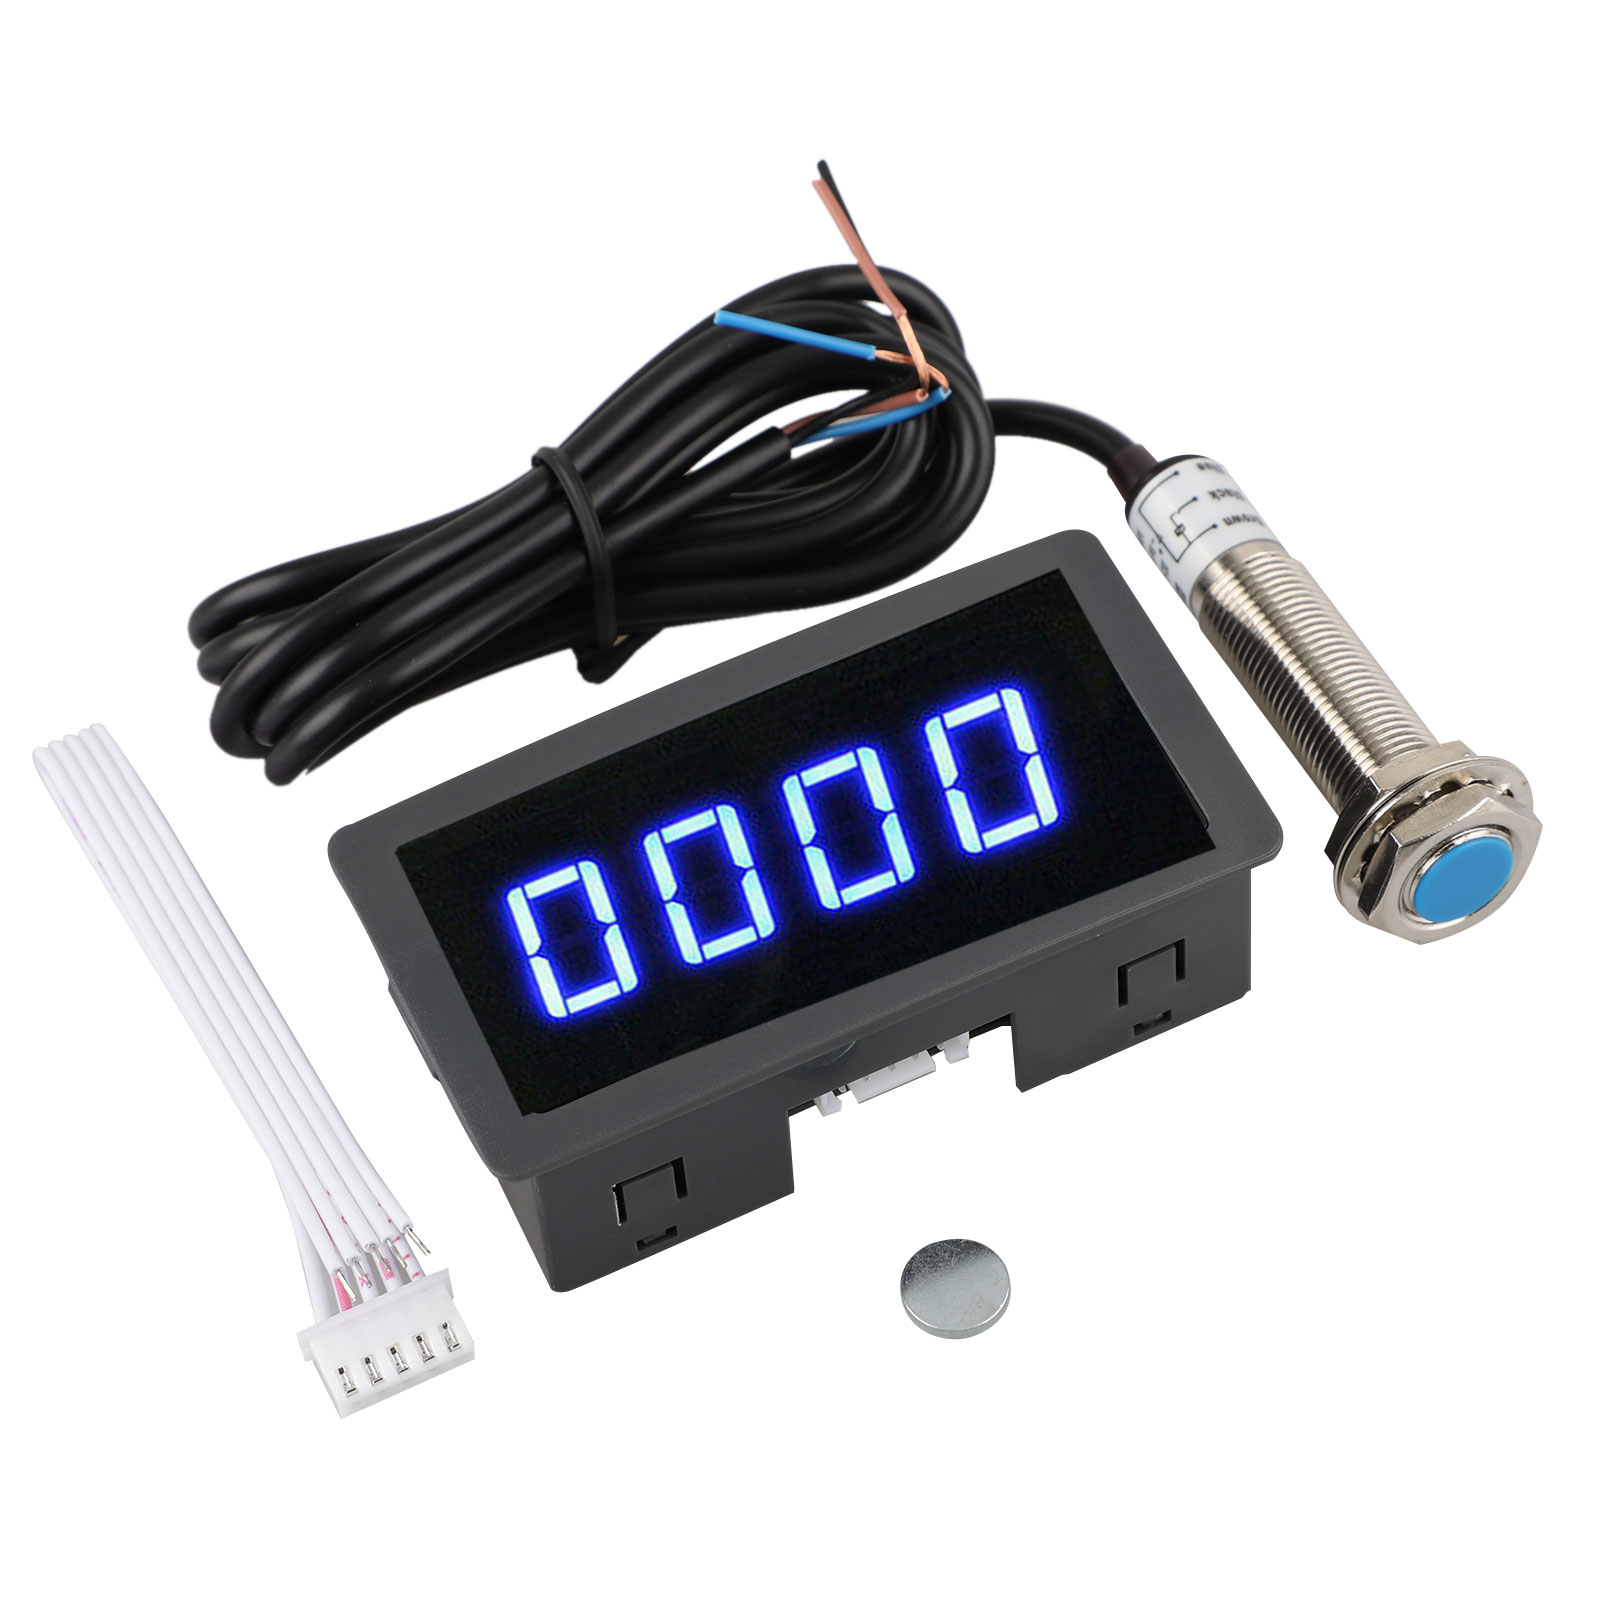 Digital Speed Meter Tachometer LED Tachometer AC220V with 4-Digit Tube Display High Measurement Accuracy 